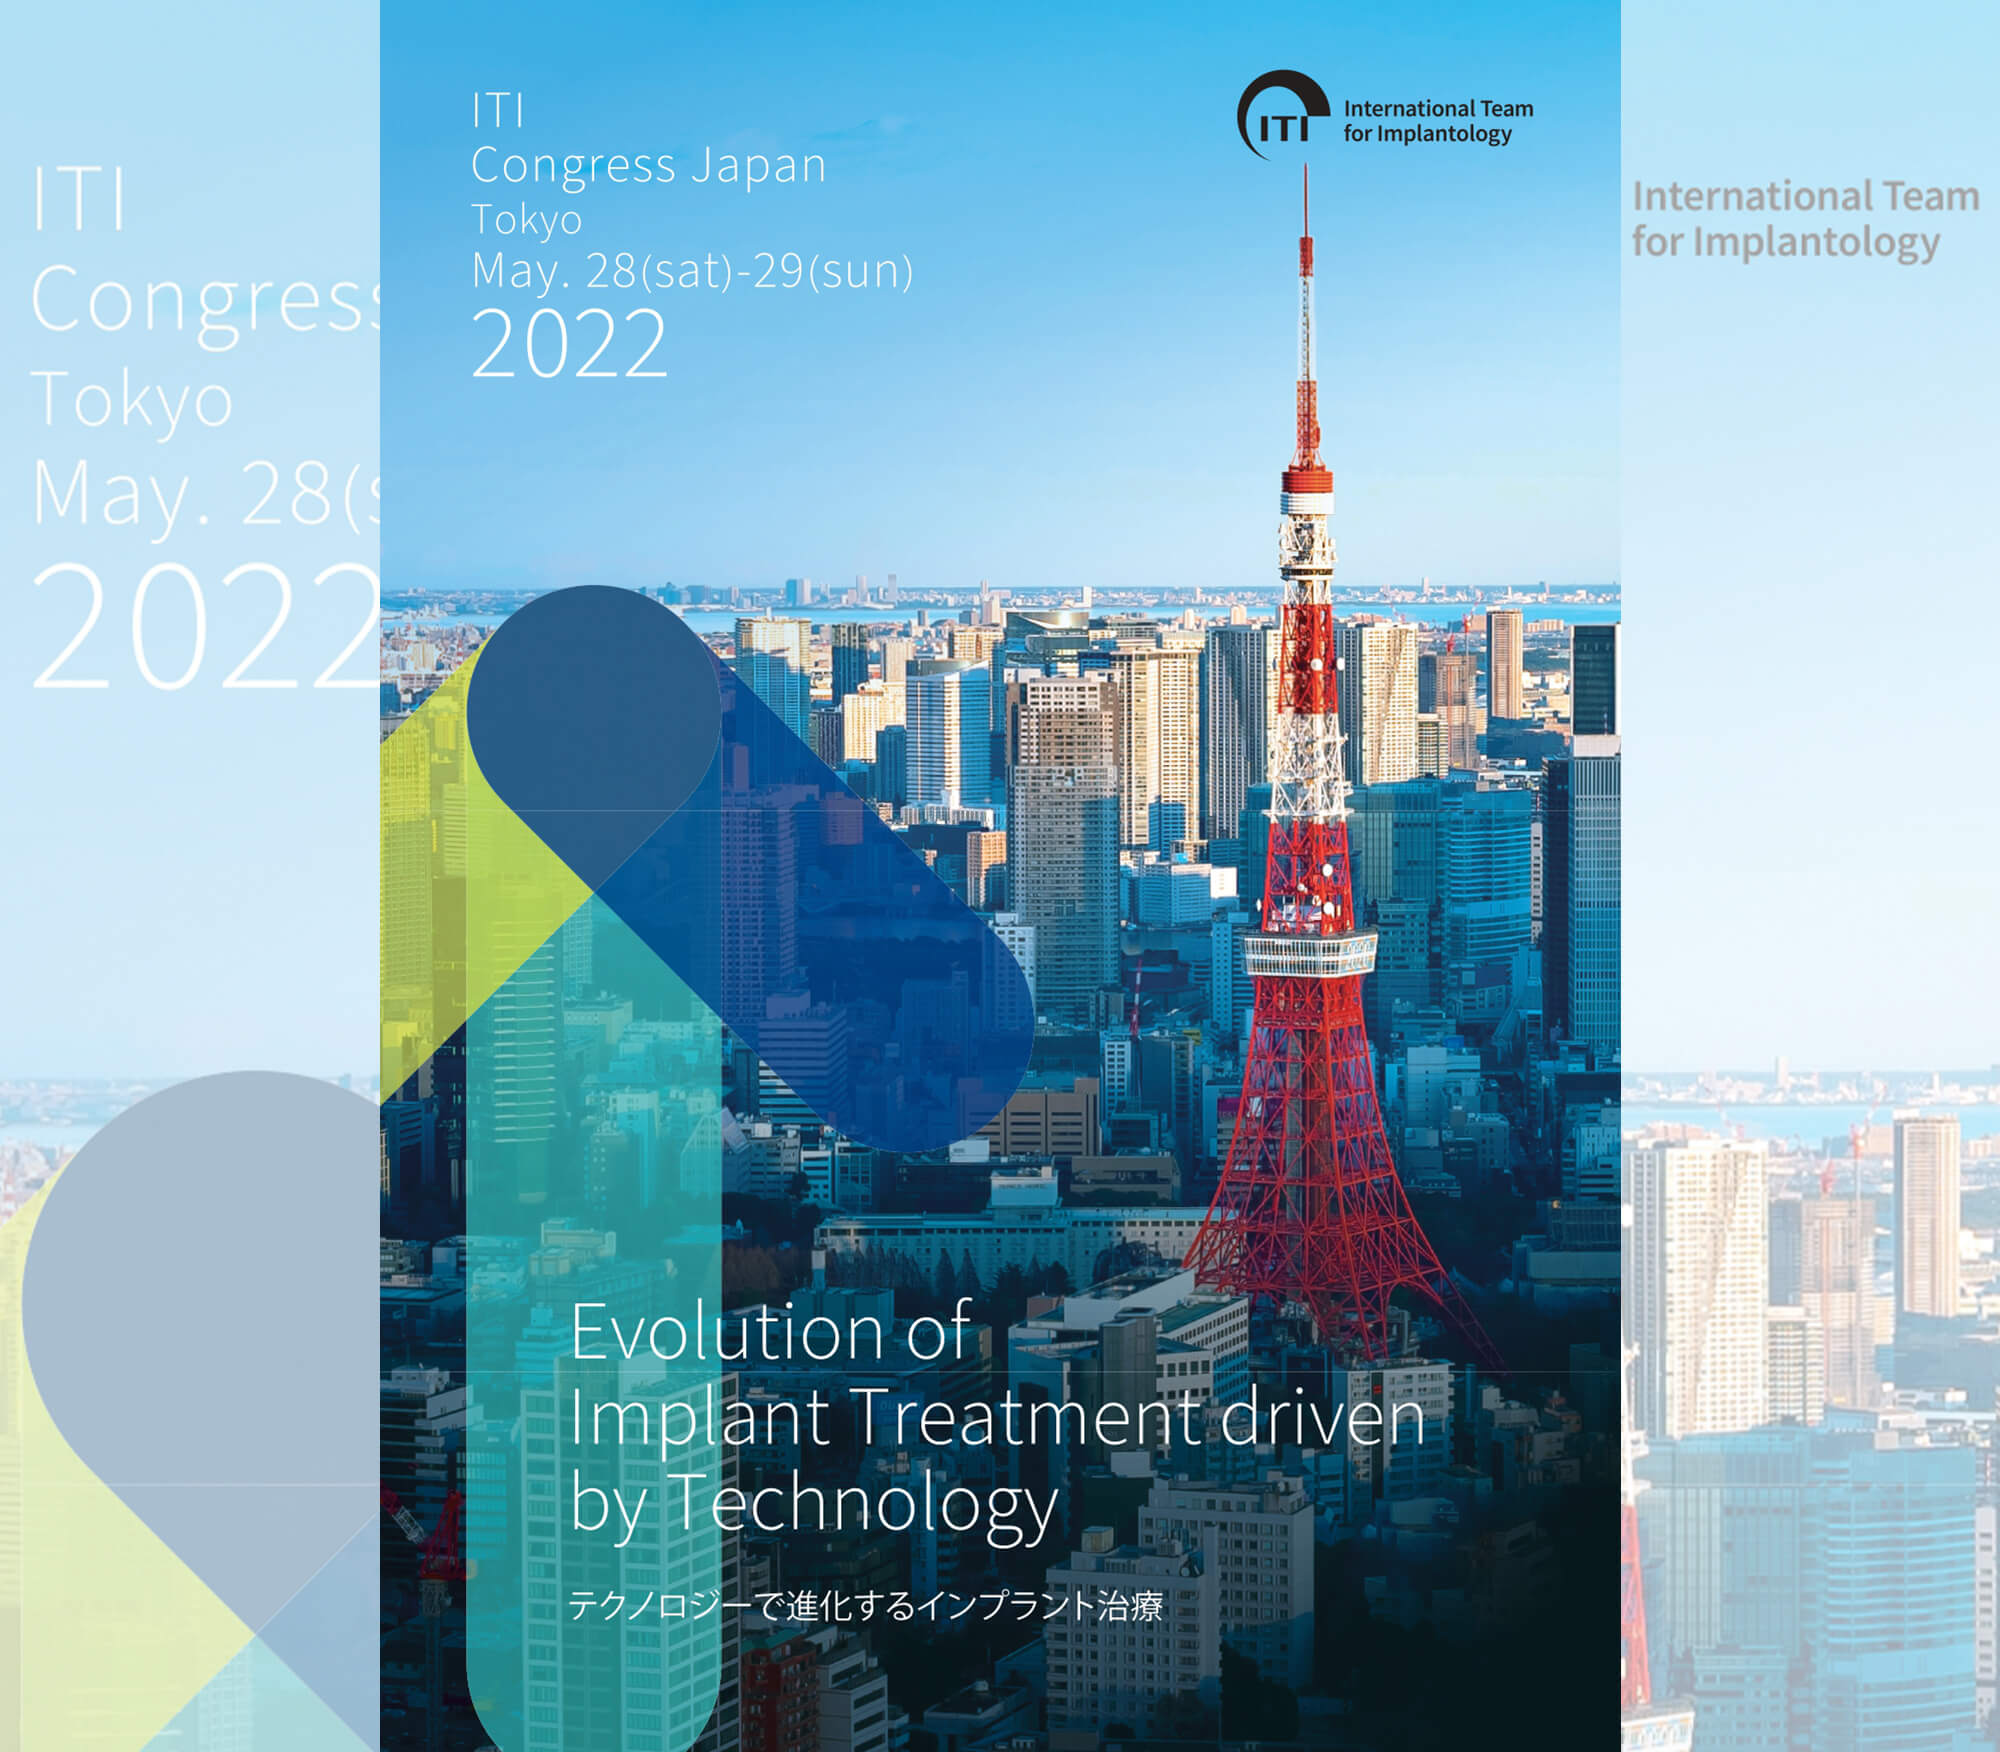 ITI Congress Japan Tokyo May.28(Sat)-29(Sun) 2022【テーマ】テクノロジーで進化するインプラント治療【会場】虎ノ門ヒルズフォーラム